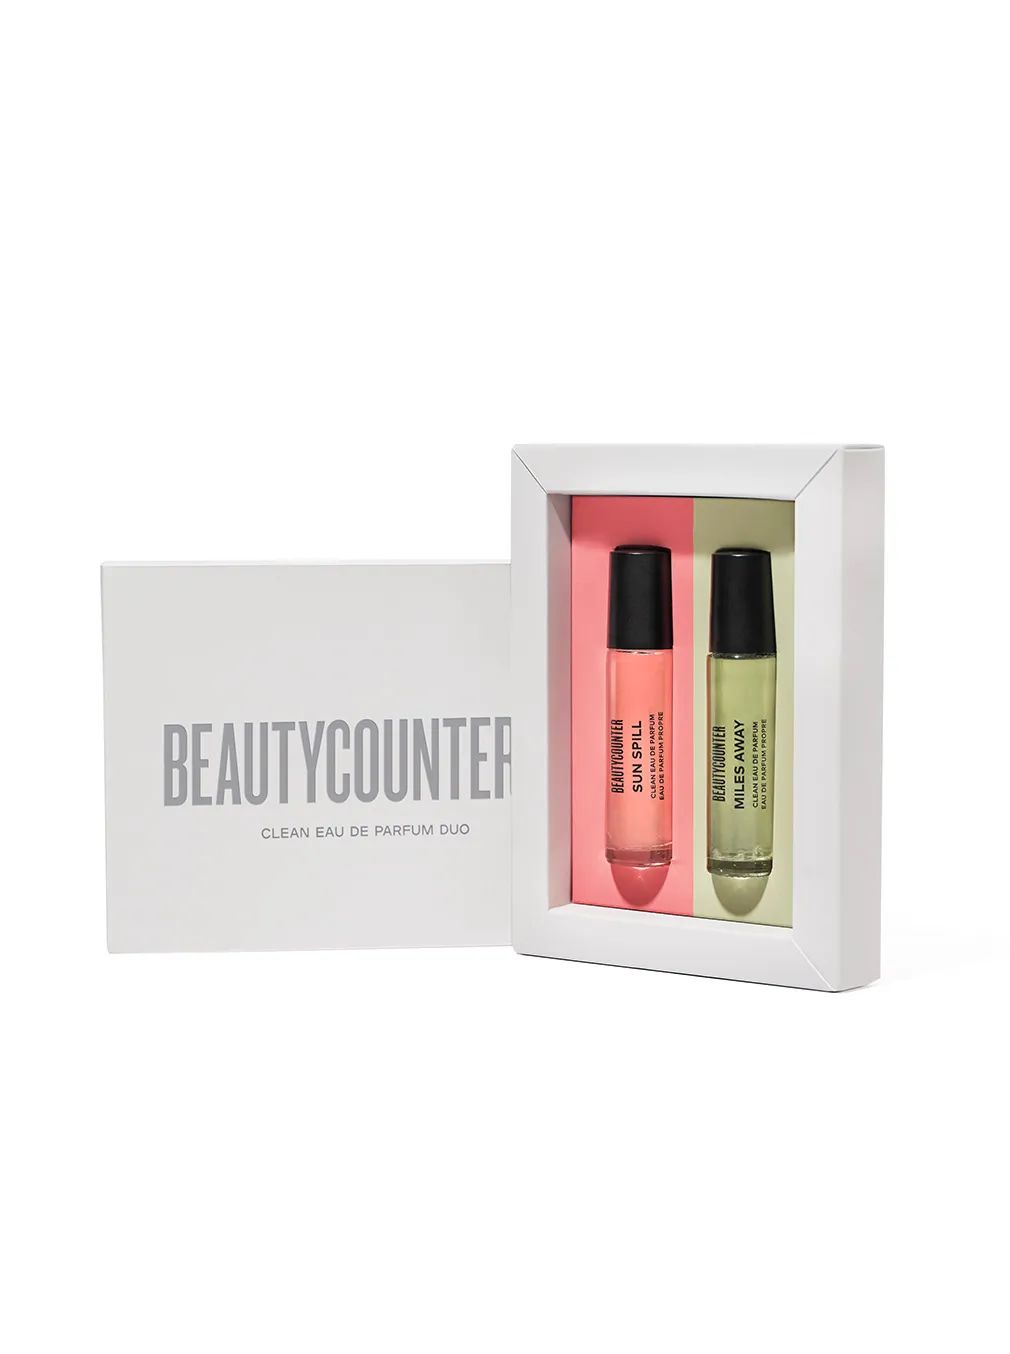 Clean Eau De Parfum Duo - Beautycounter - Skin Care, Makeup, Bath and Body and more! | Beautycounter.com